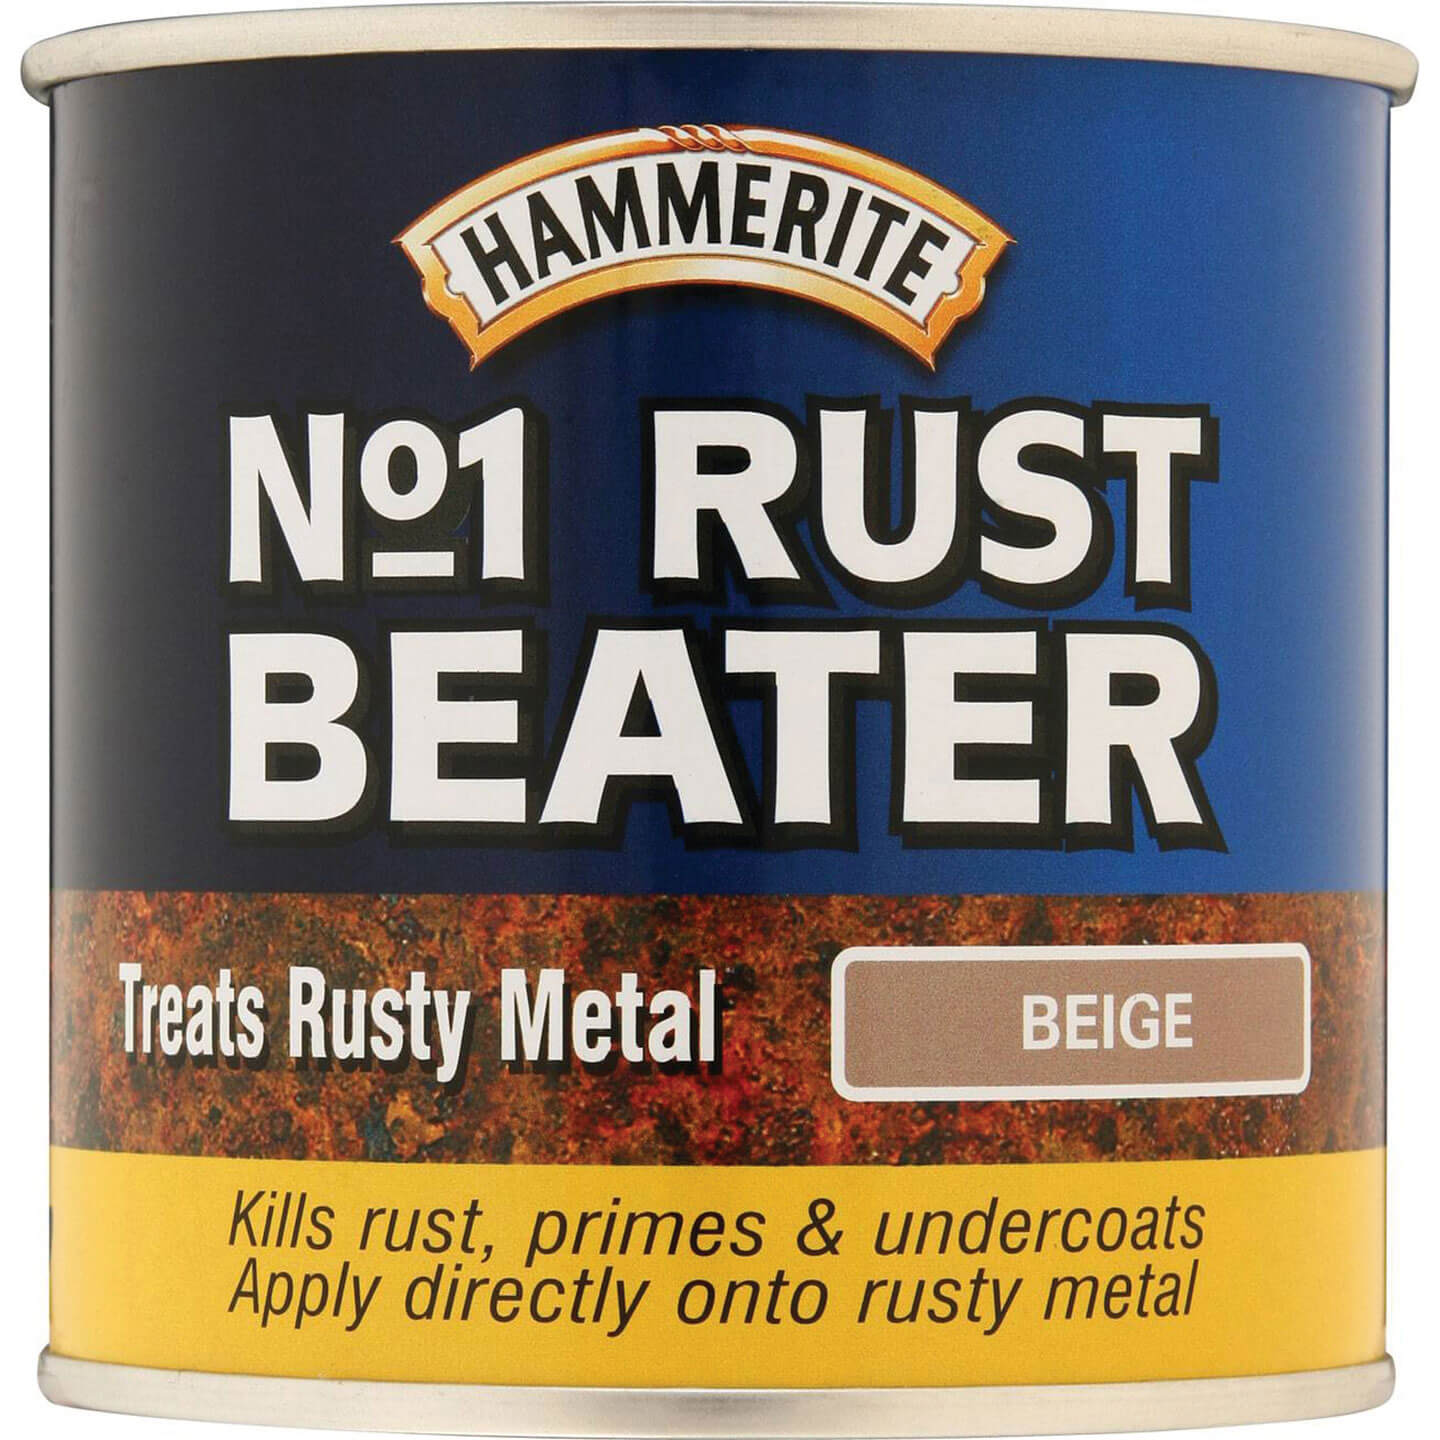 Rust can kill you фото 77